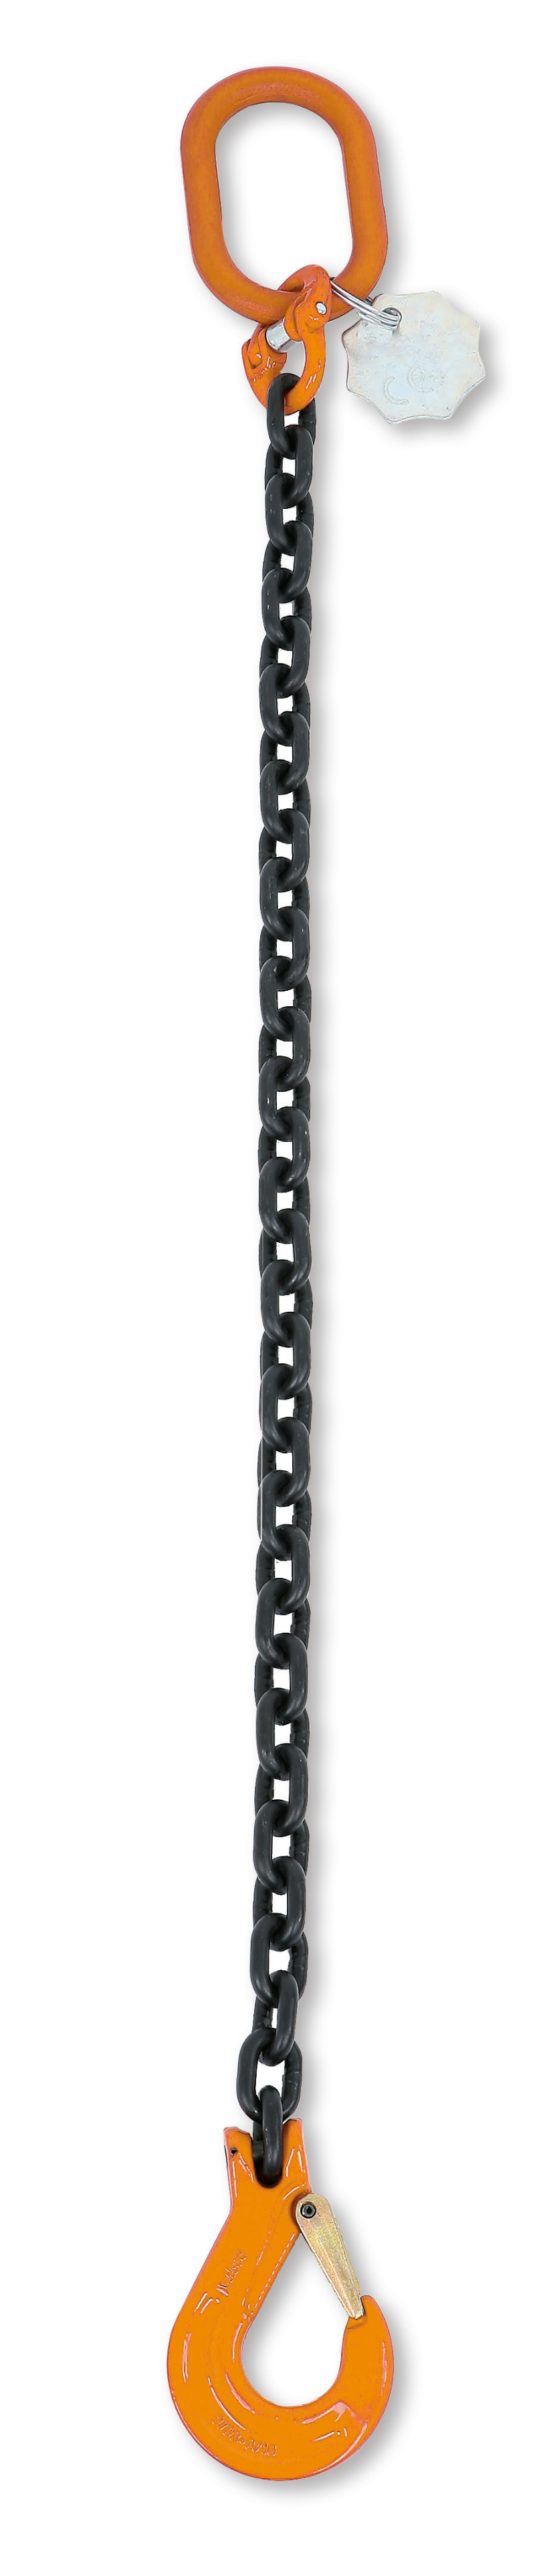 Lifting chain slings, 1 leg grade 8 category image